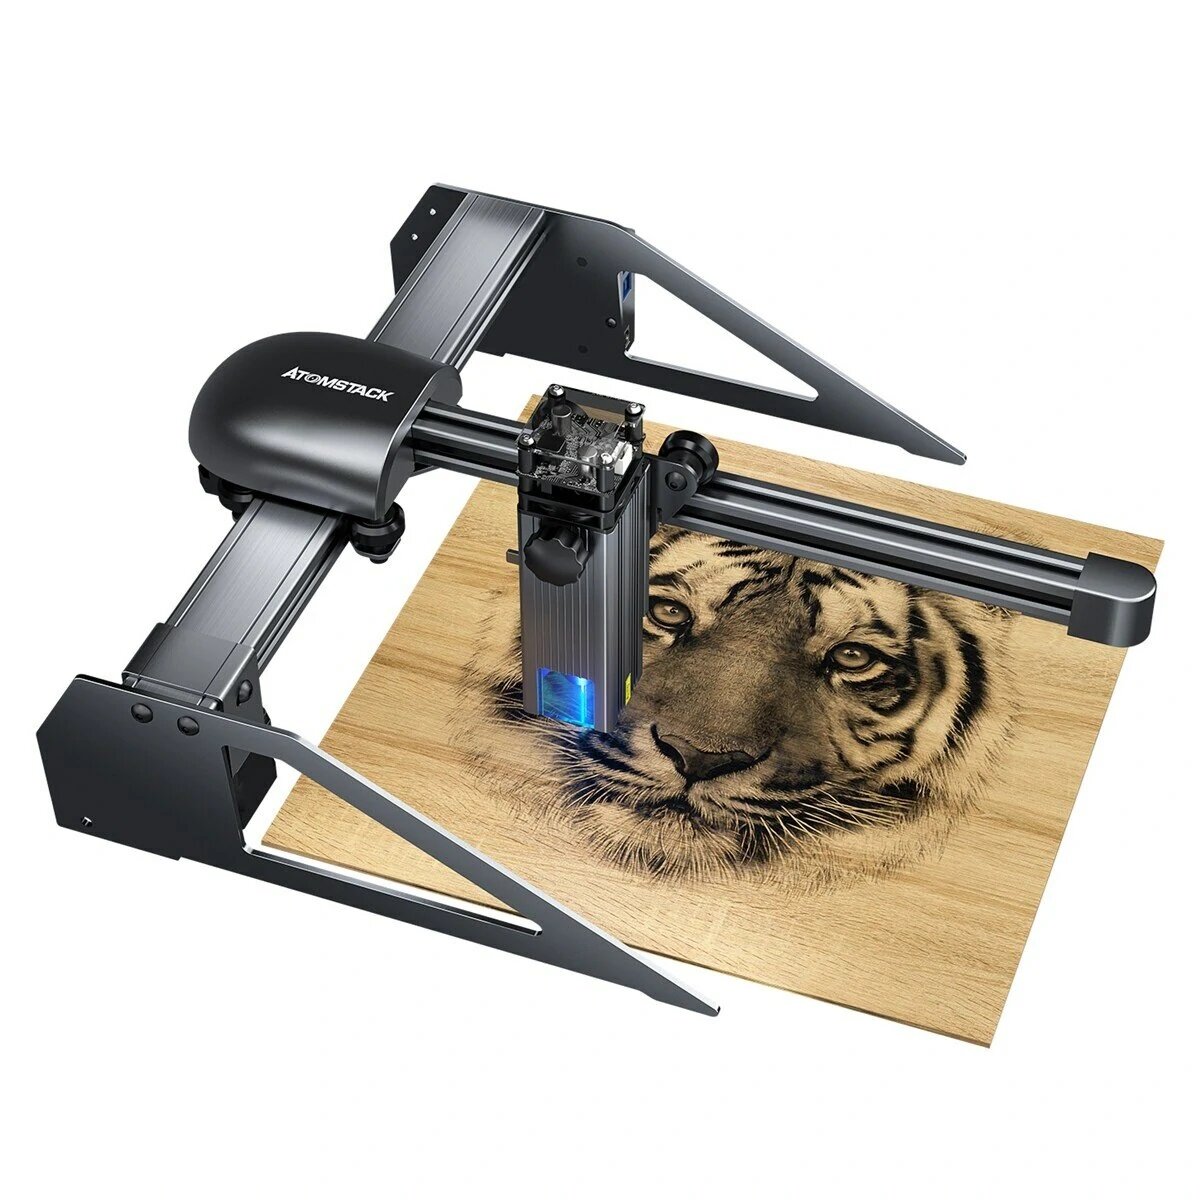 [EU DIRECT] New ATOMSTACK P7 M40 Portable Laser Engraving Machine Cutter Wood Cutting Design Desktop DIY Laser Engraver